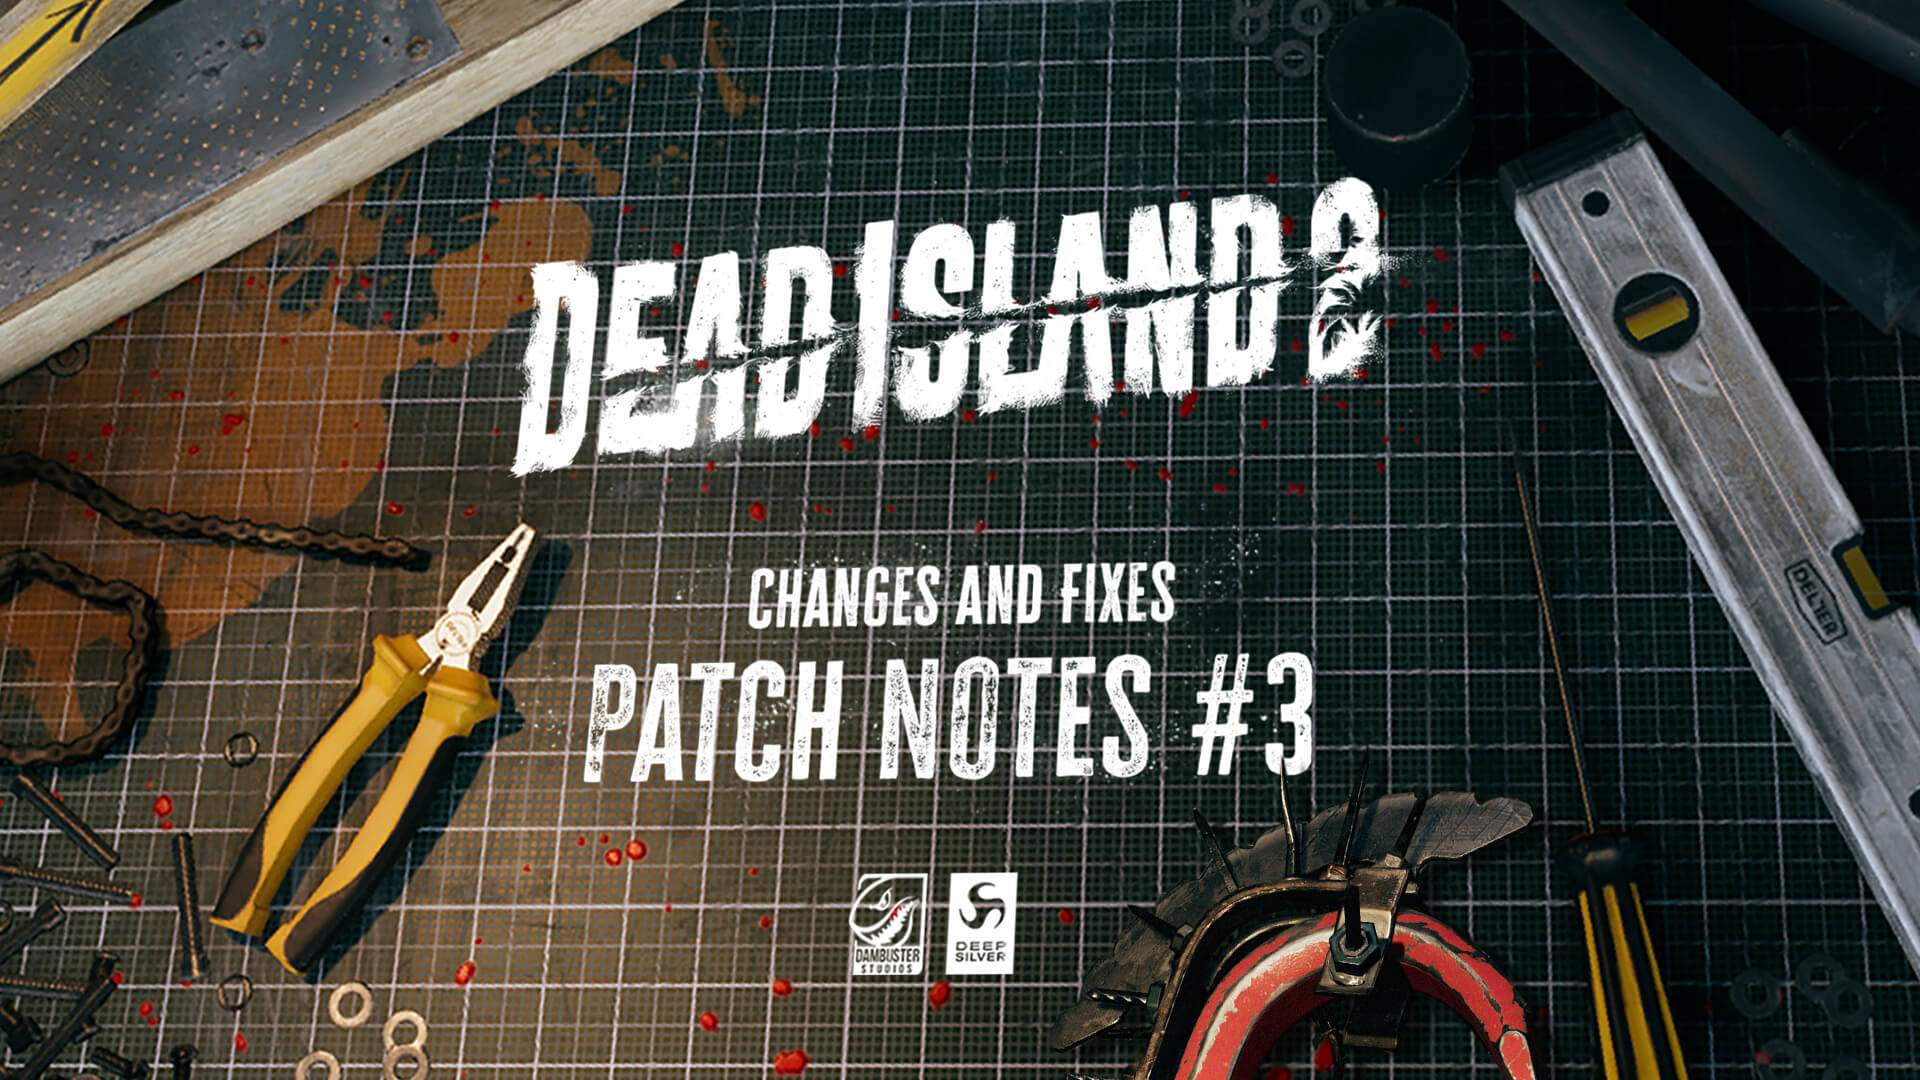 Dead island 2 haus expansion help? : r/deadisland